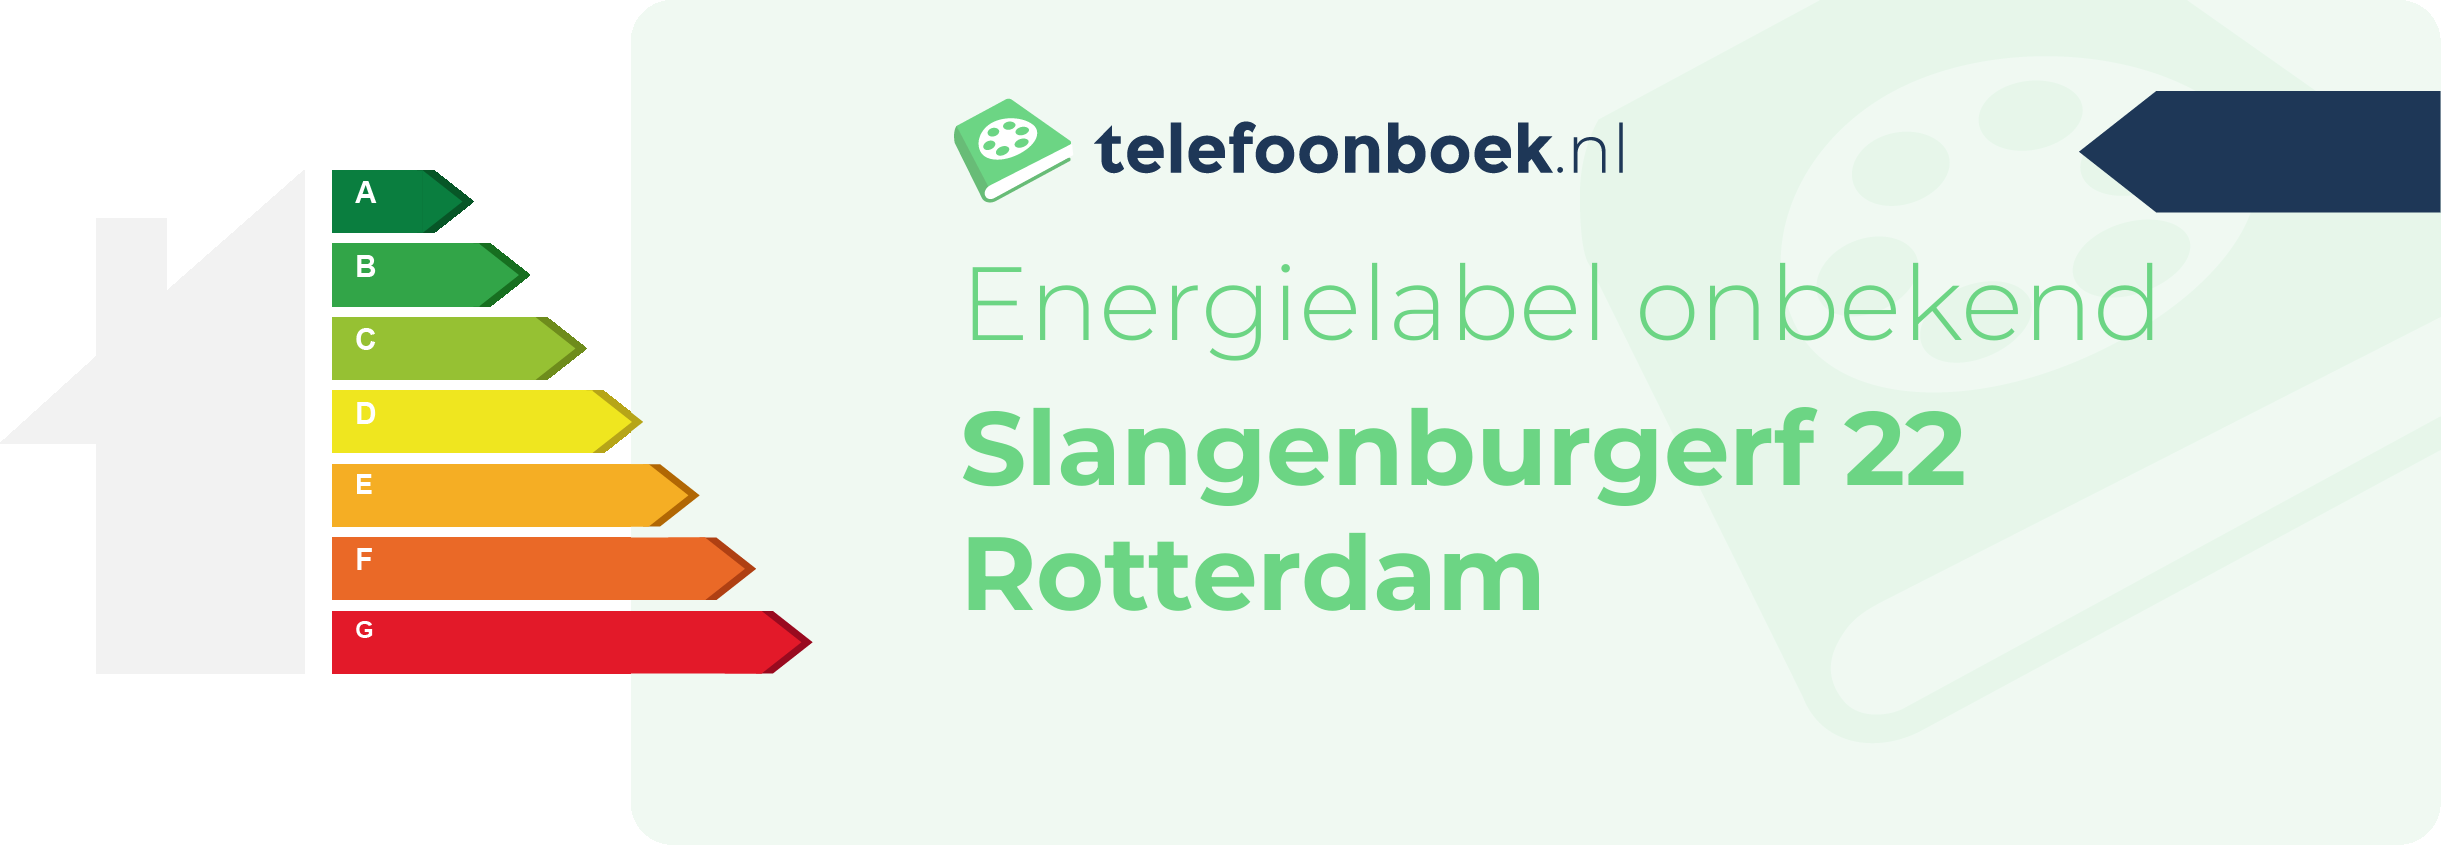 Energielabel Slangenburgerf 22 Rotterdam